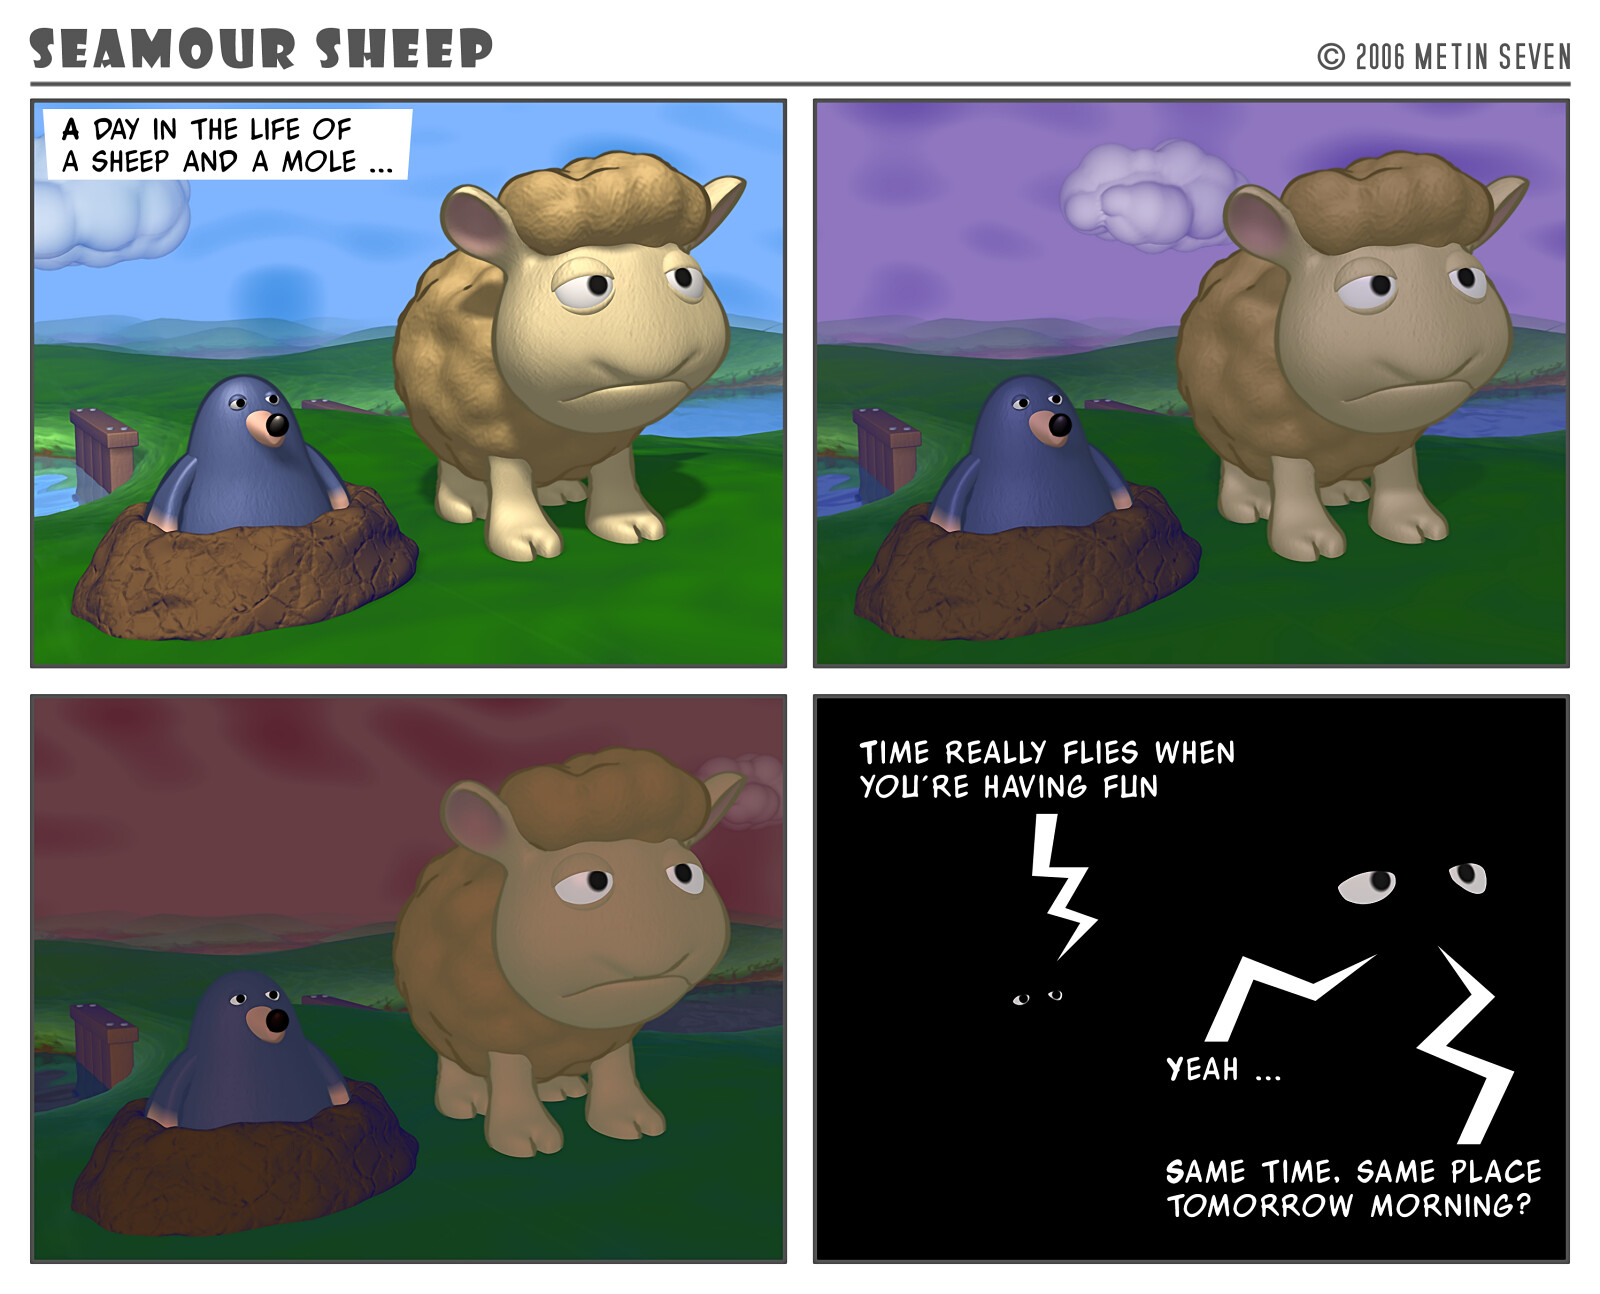 Seamour Sheep and Marty Mole comic strip episode: Fun